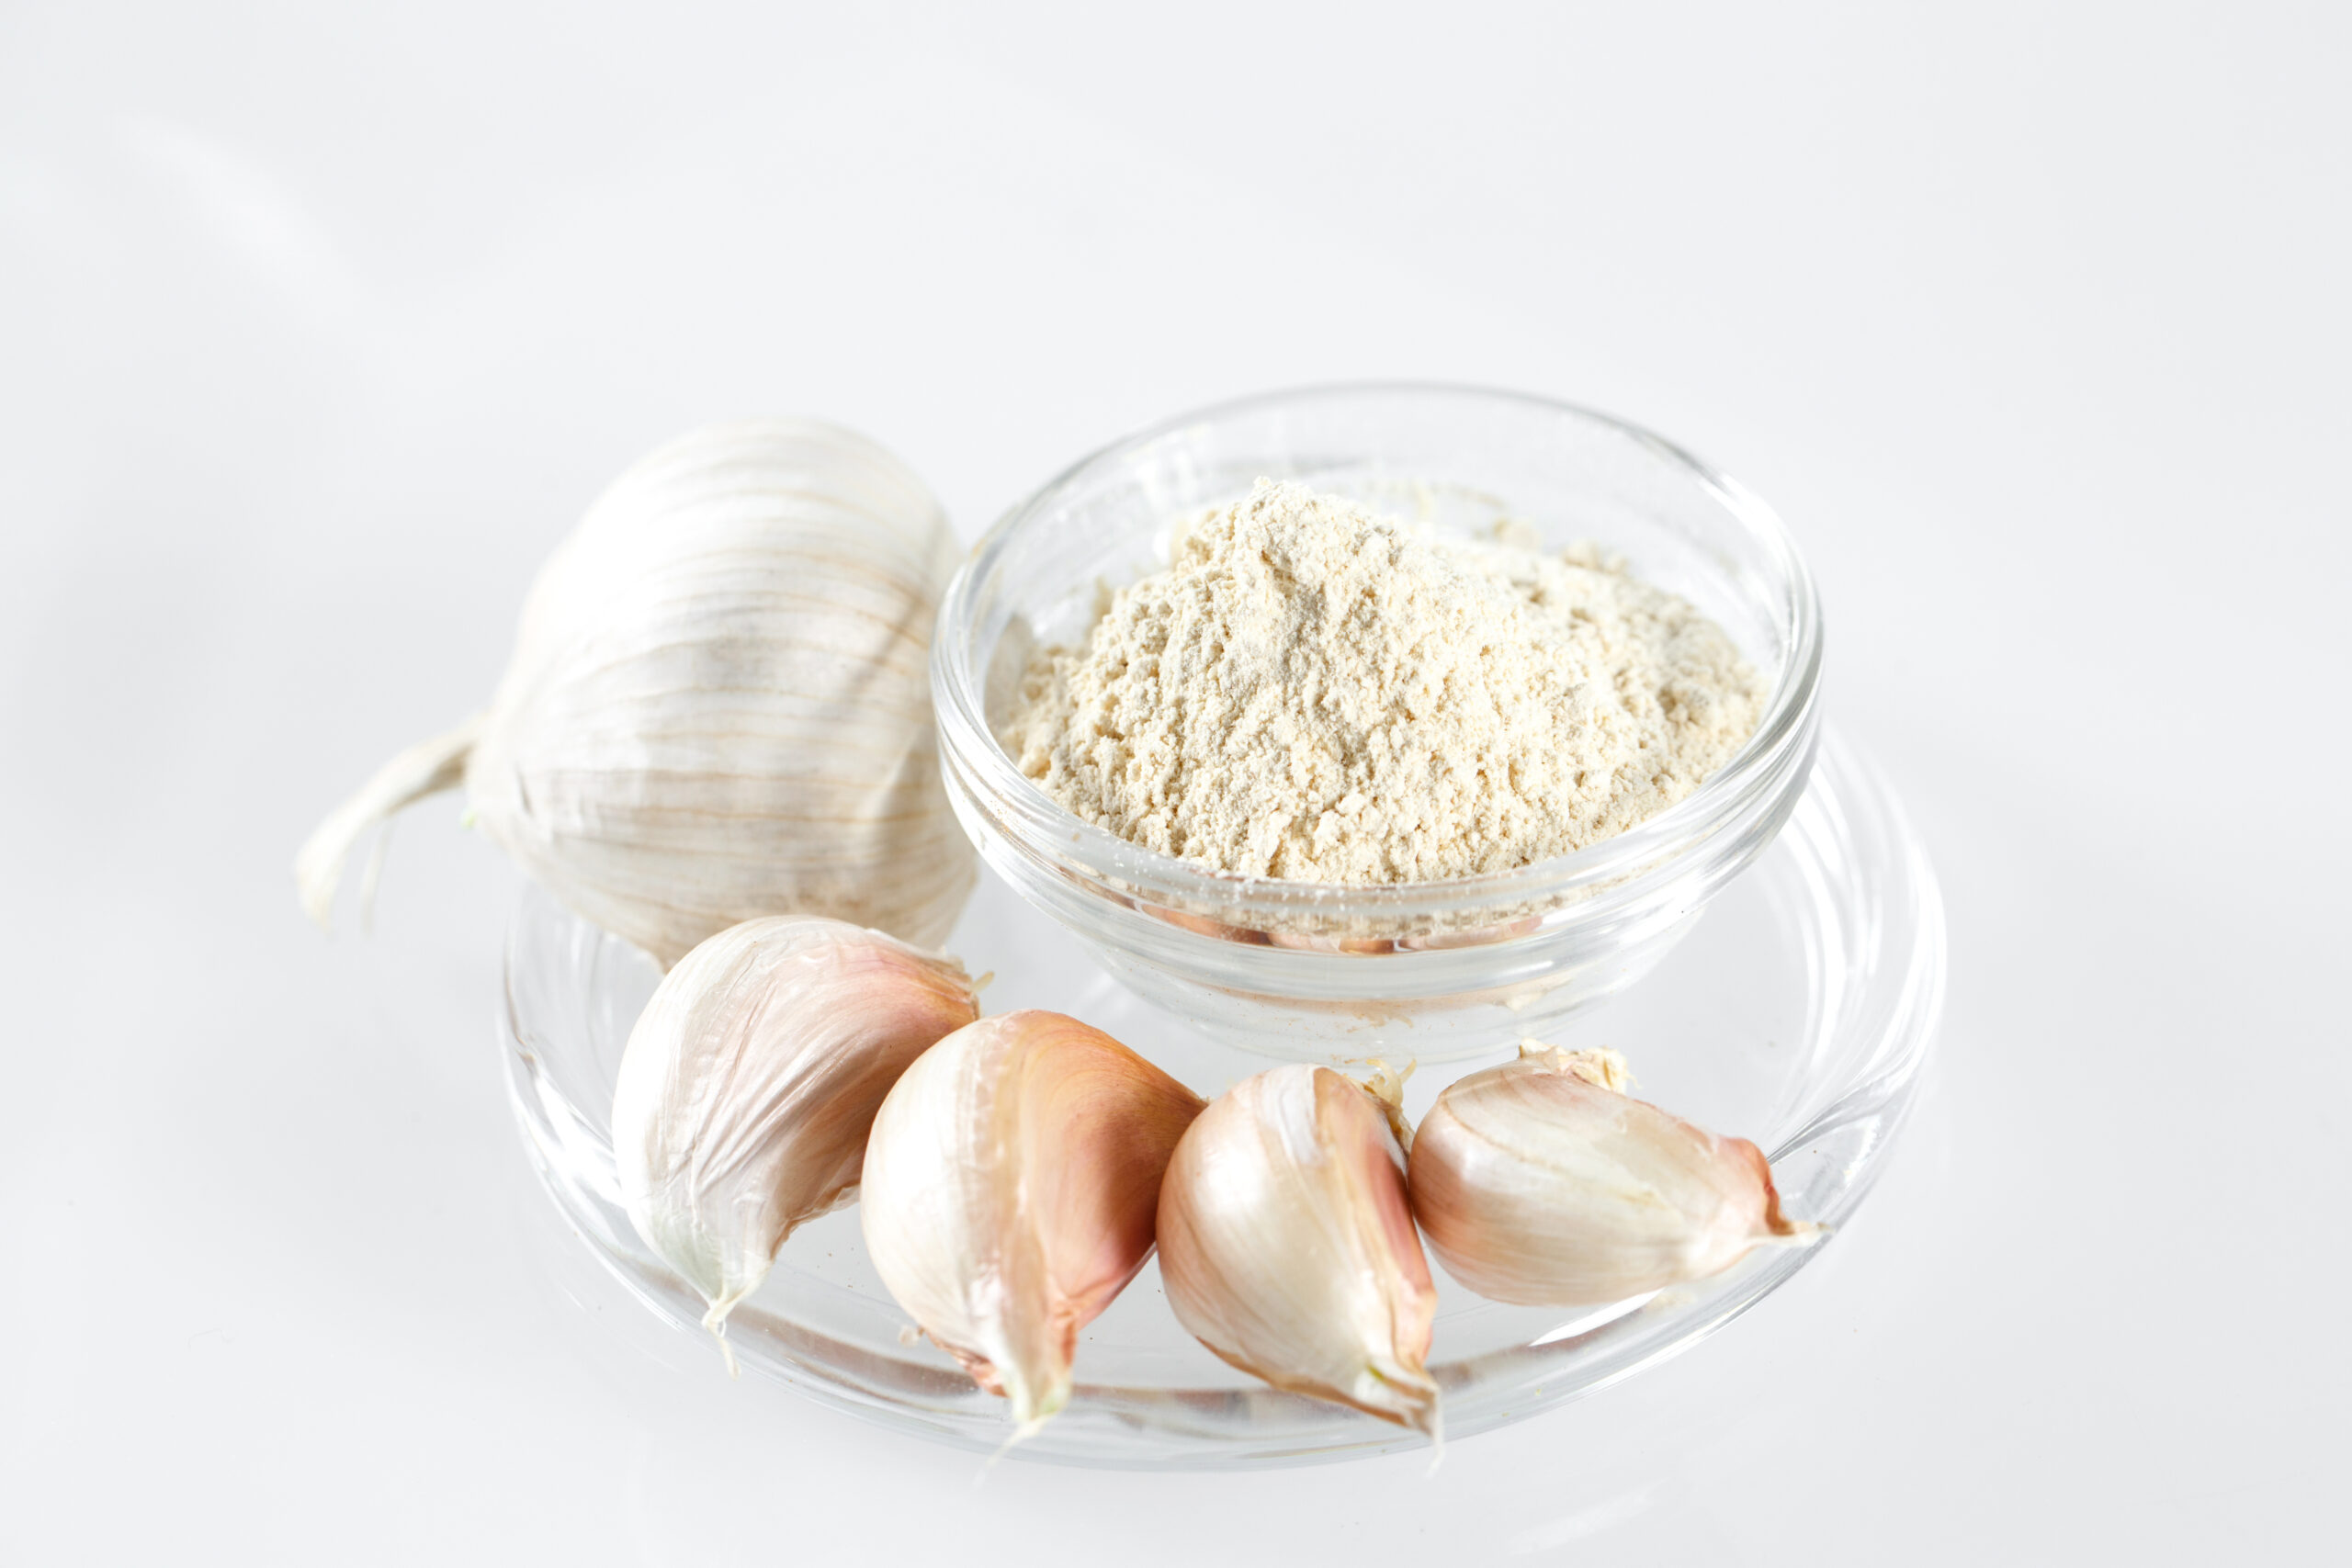 Substitute Garlic Powder for Garlic Cloves